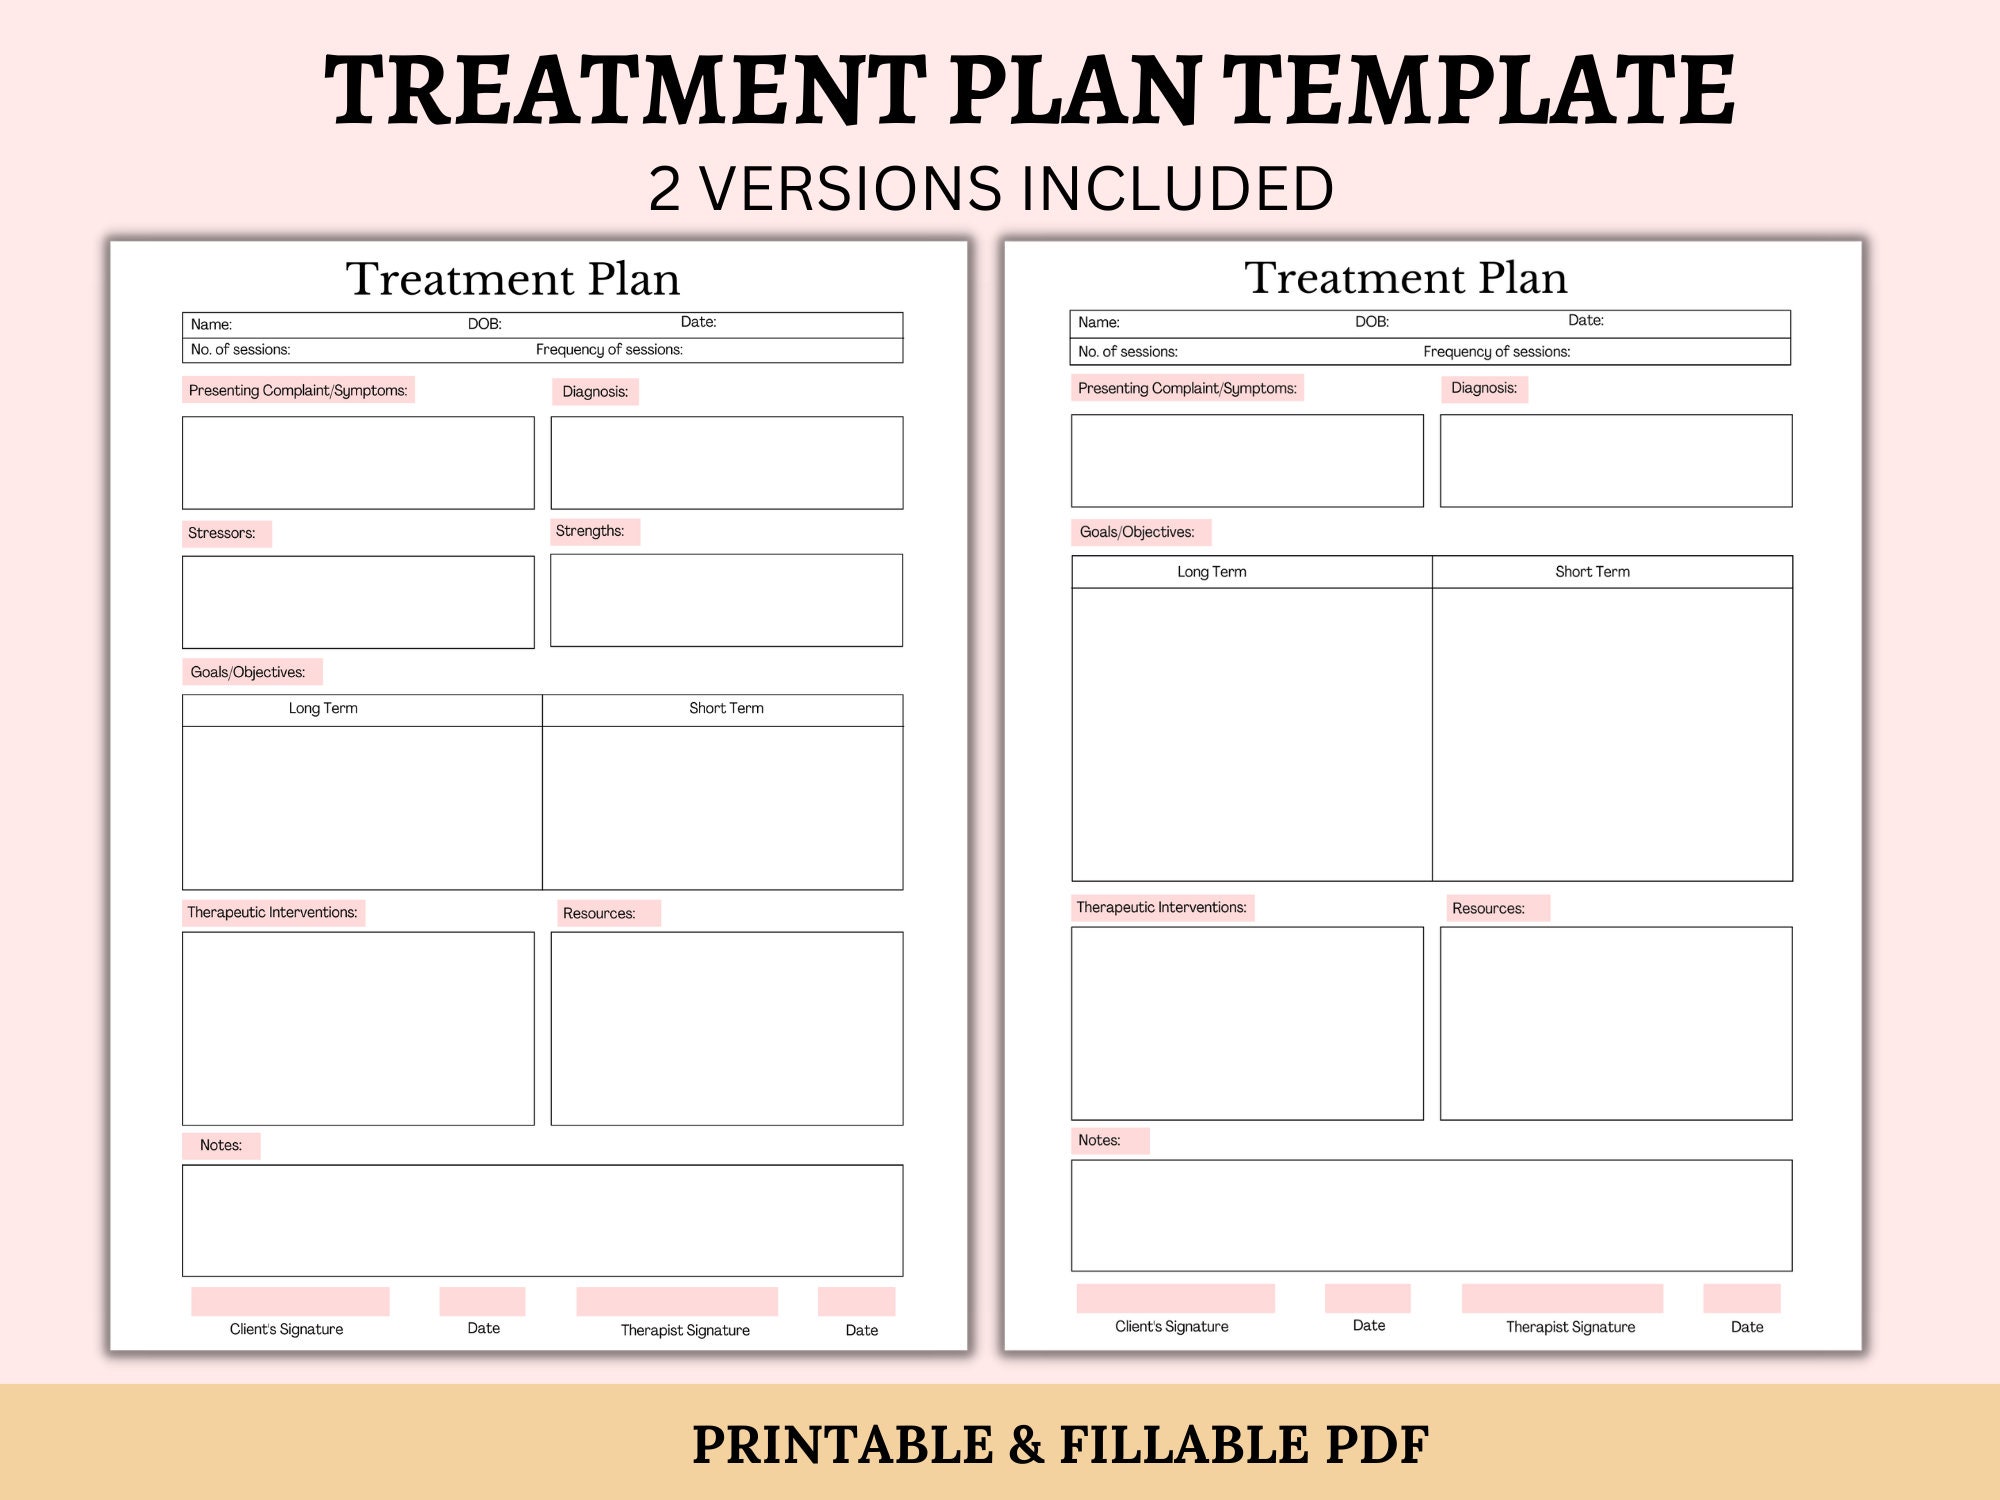 Treatment Plan Template Printable Fillable Pdf Therapist Template